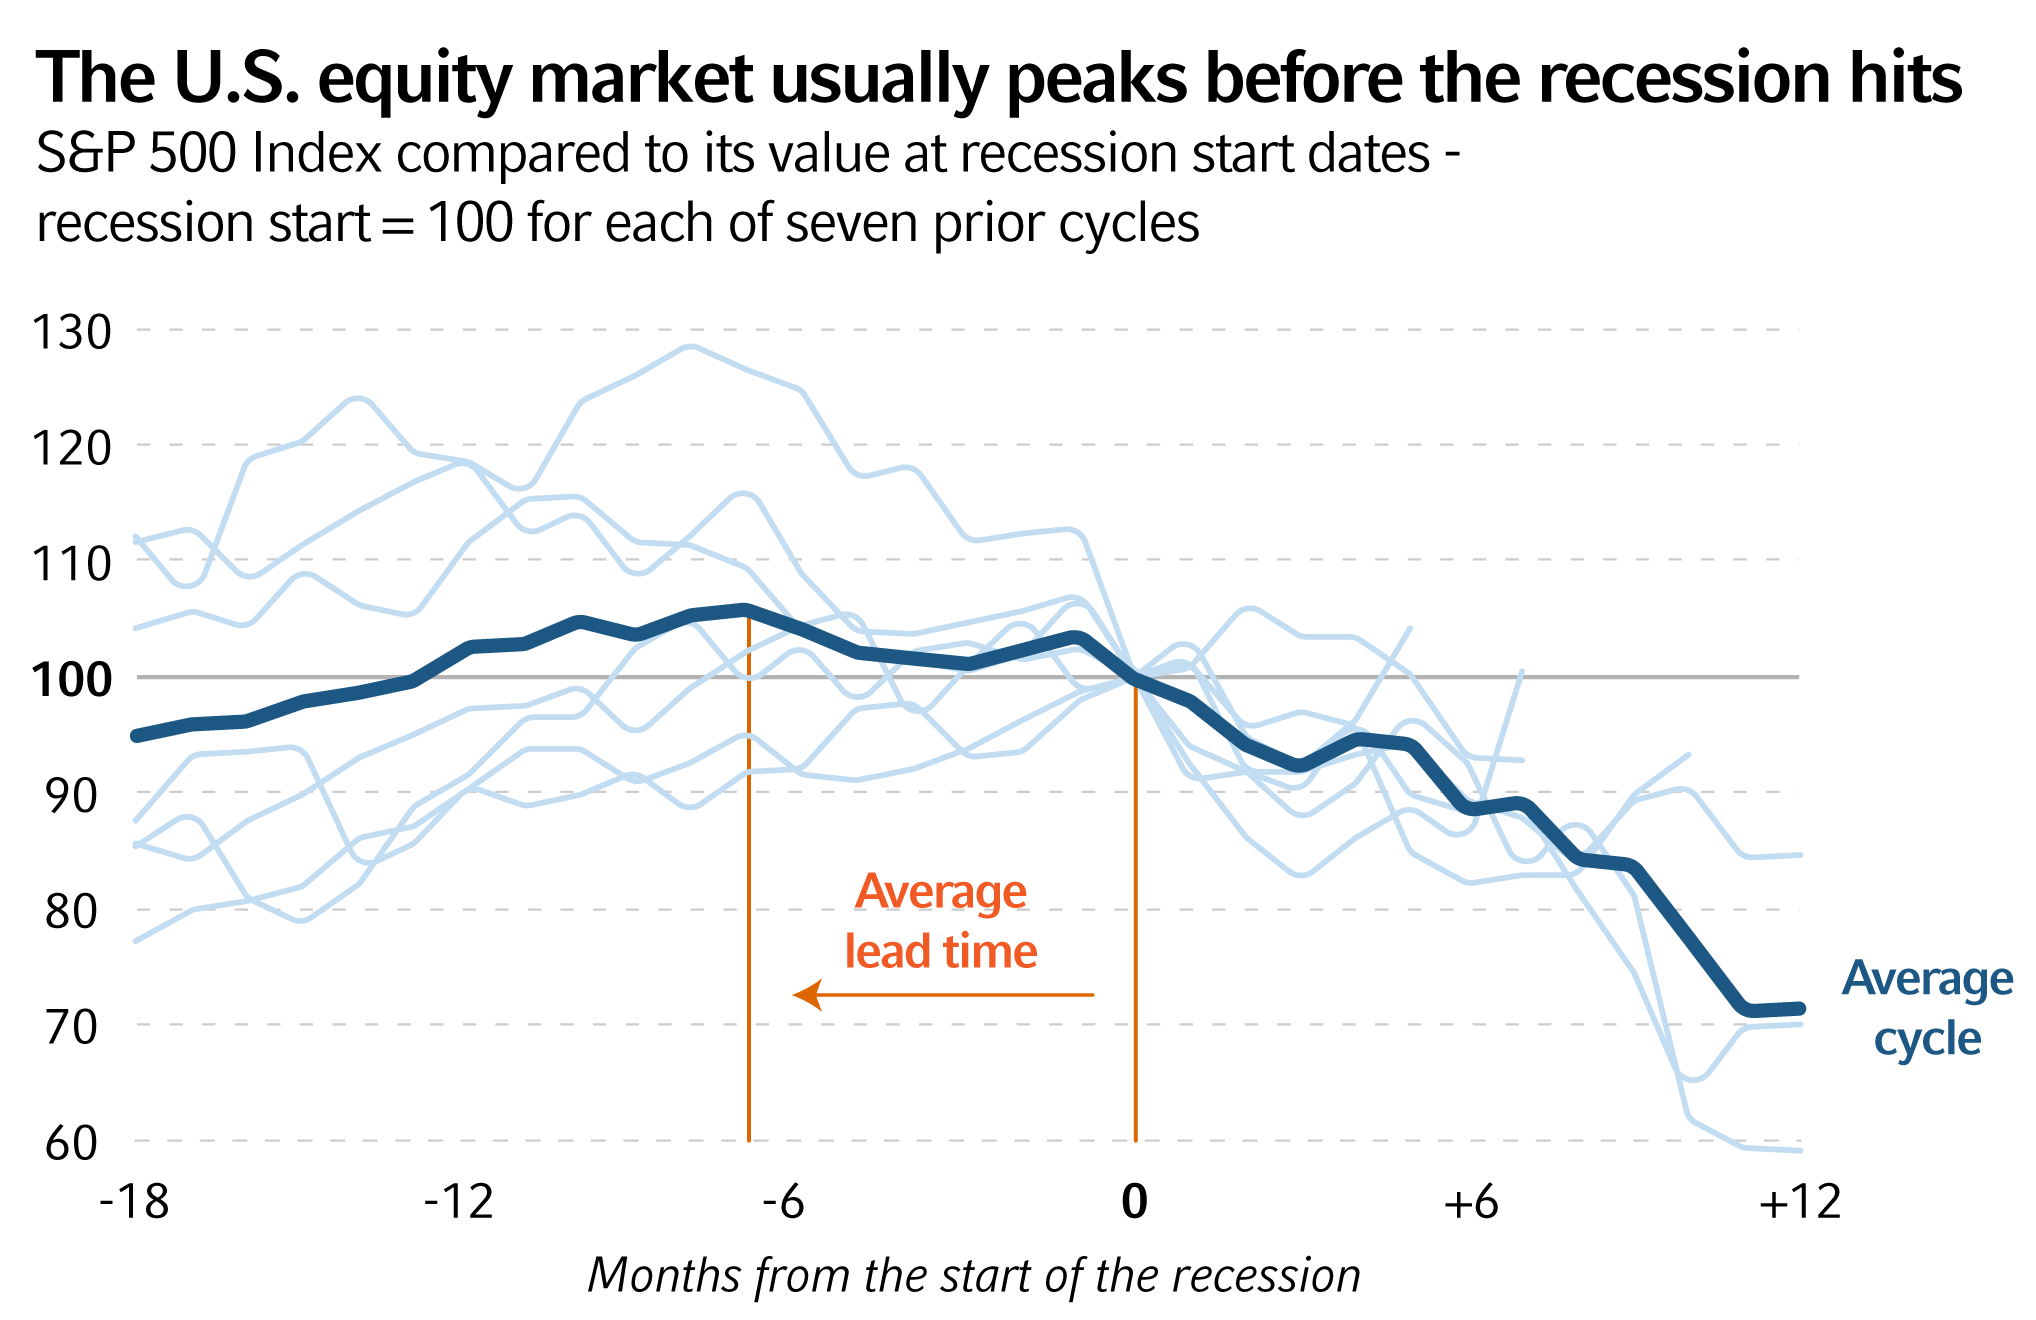 Recession lead time